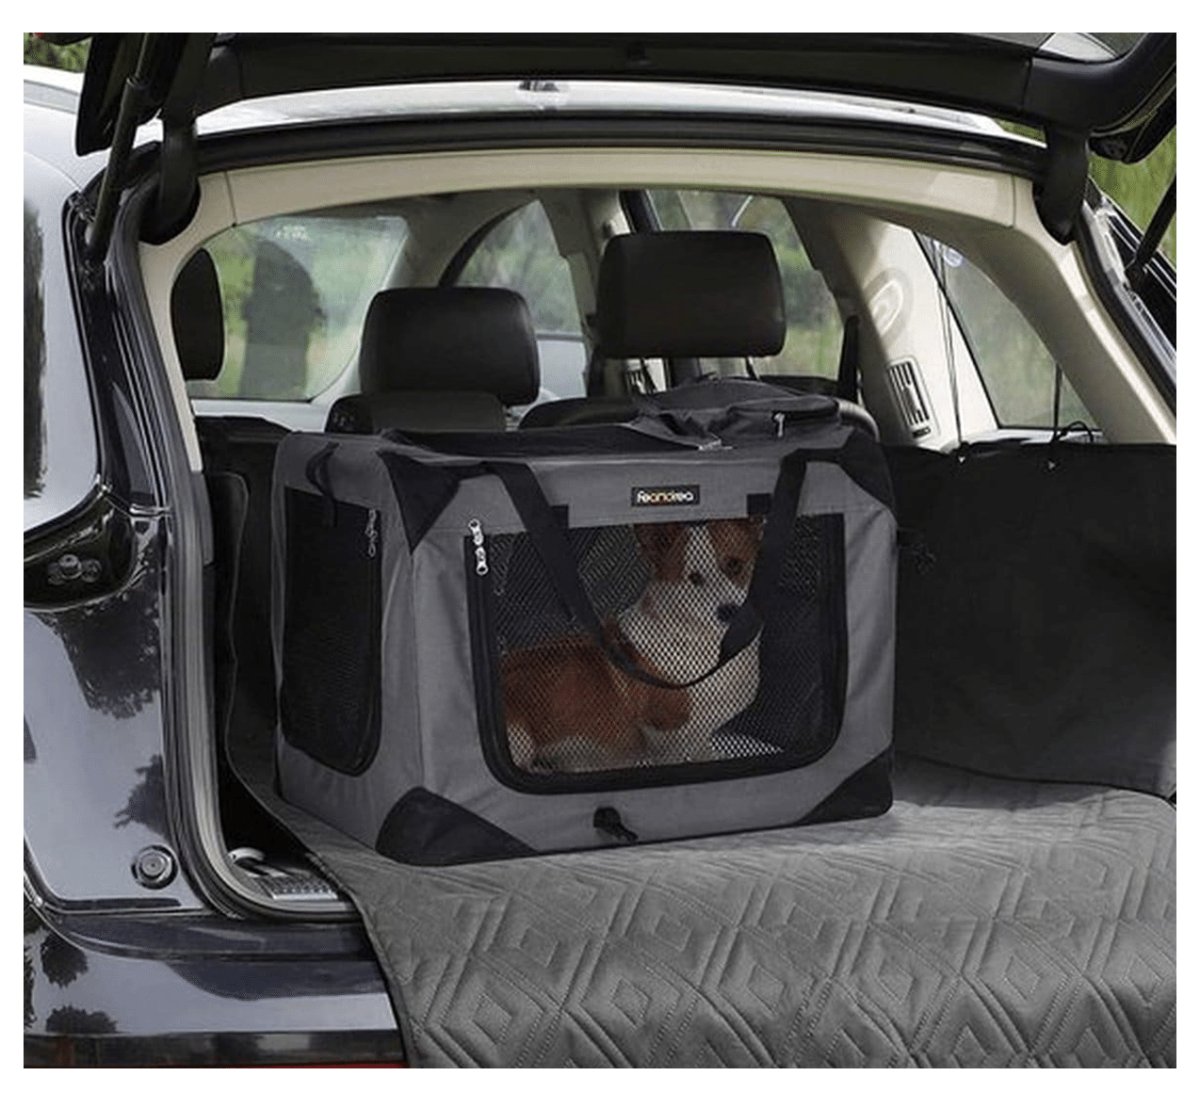 vervoer van hond of kat met tas in auto